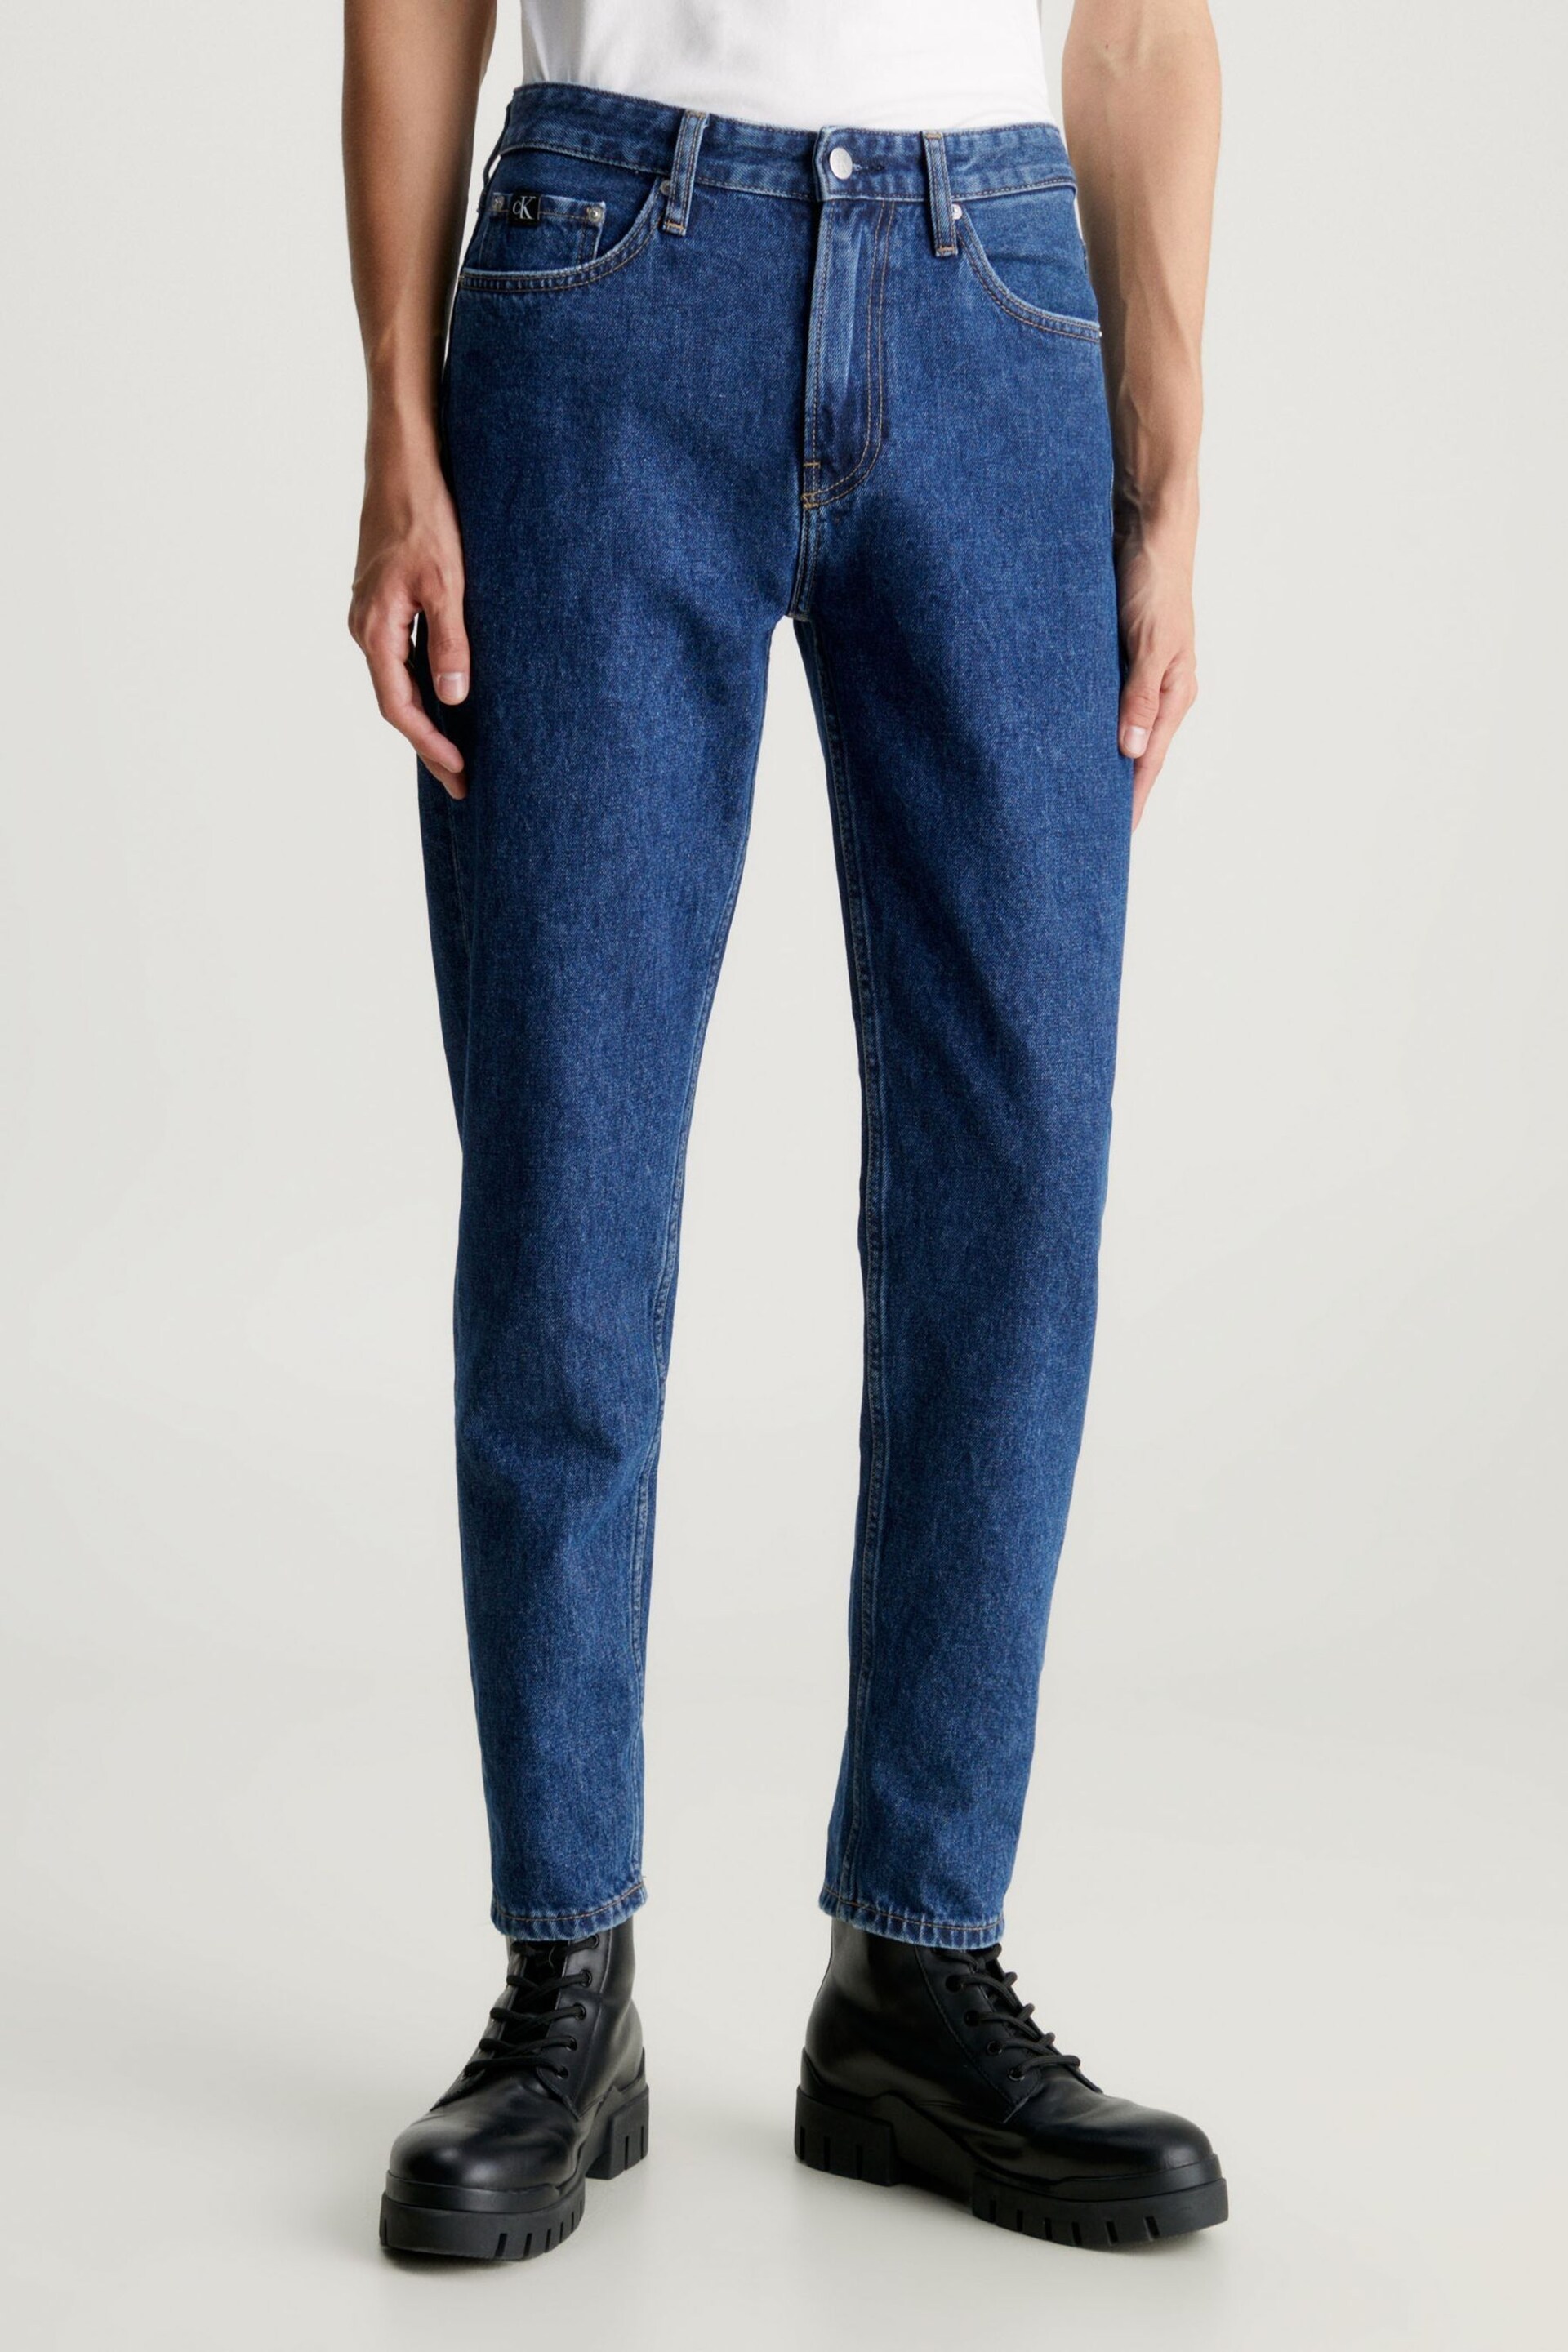 Calvin Klein Jeans Blue Regular Taper Jeans - Image 1 of 6